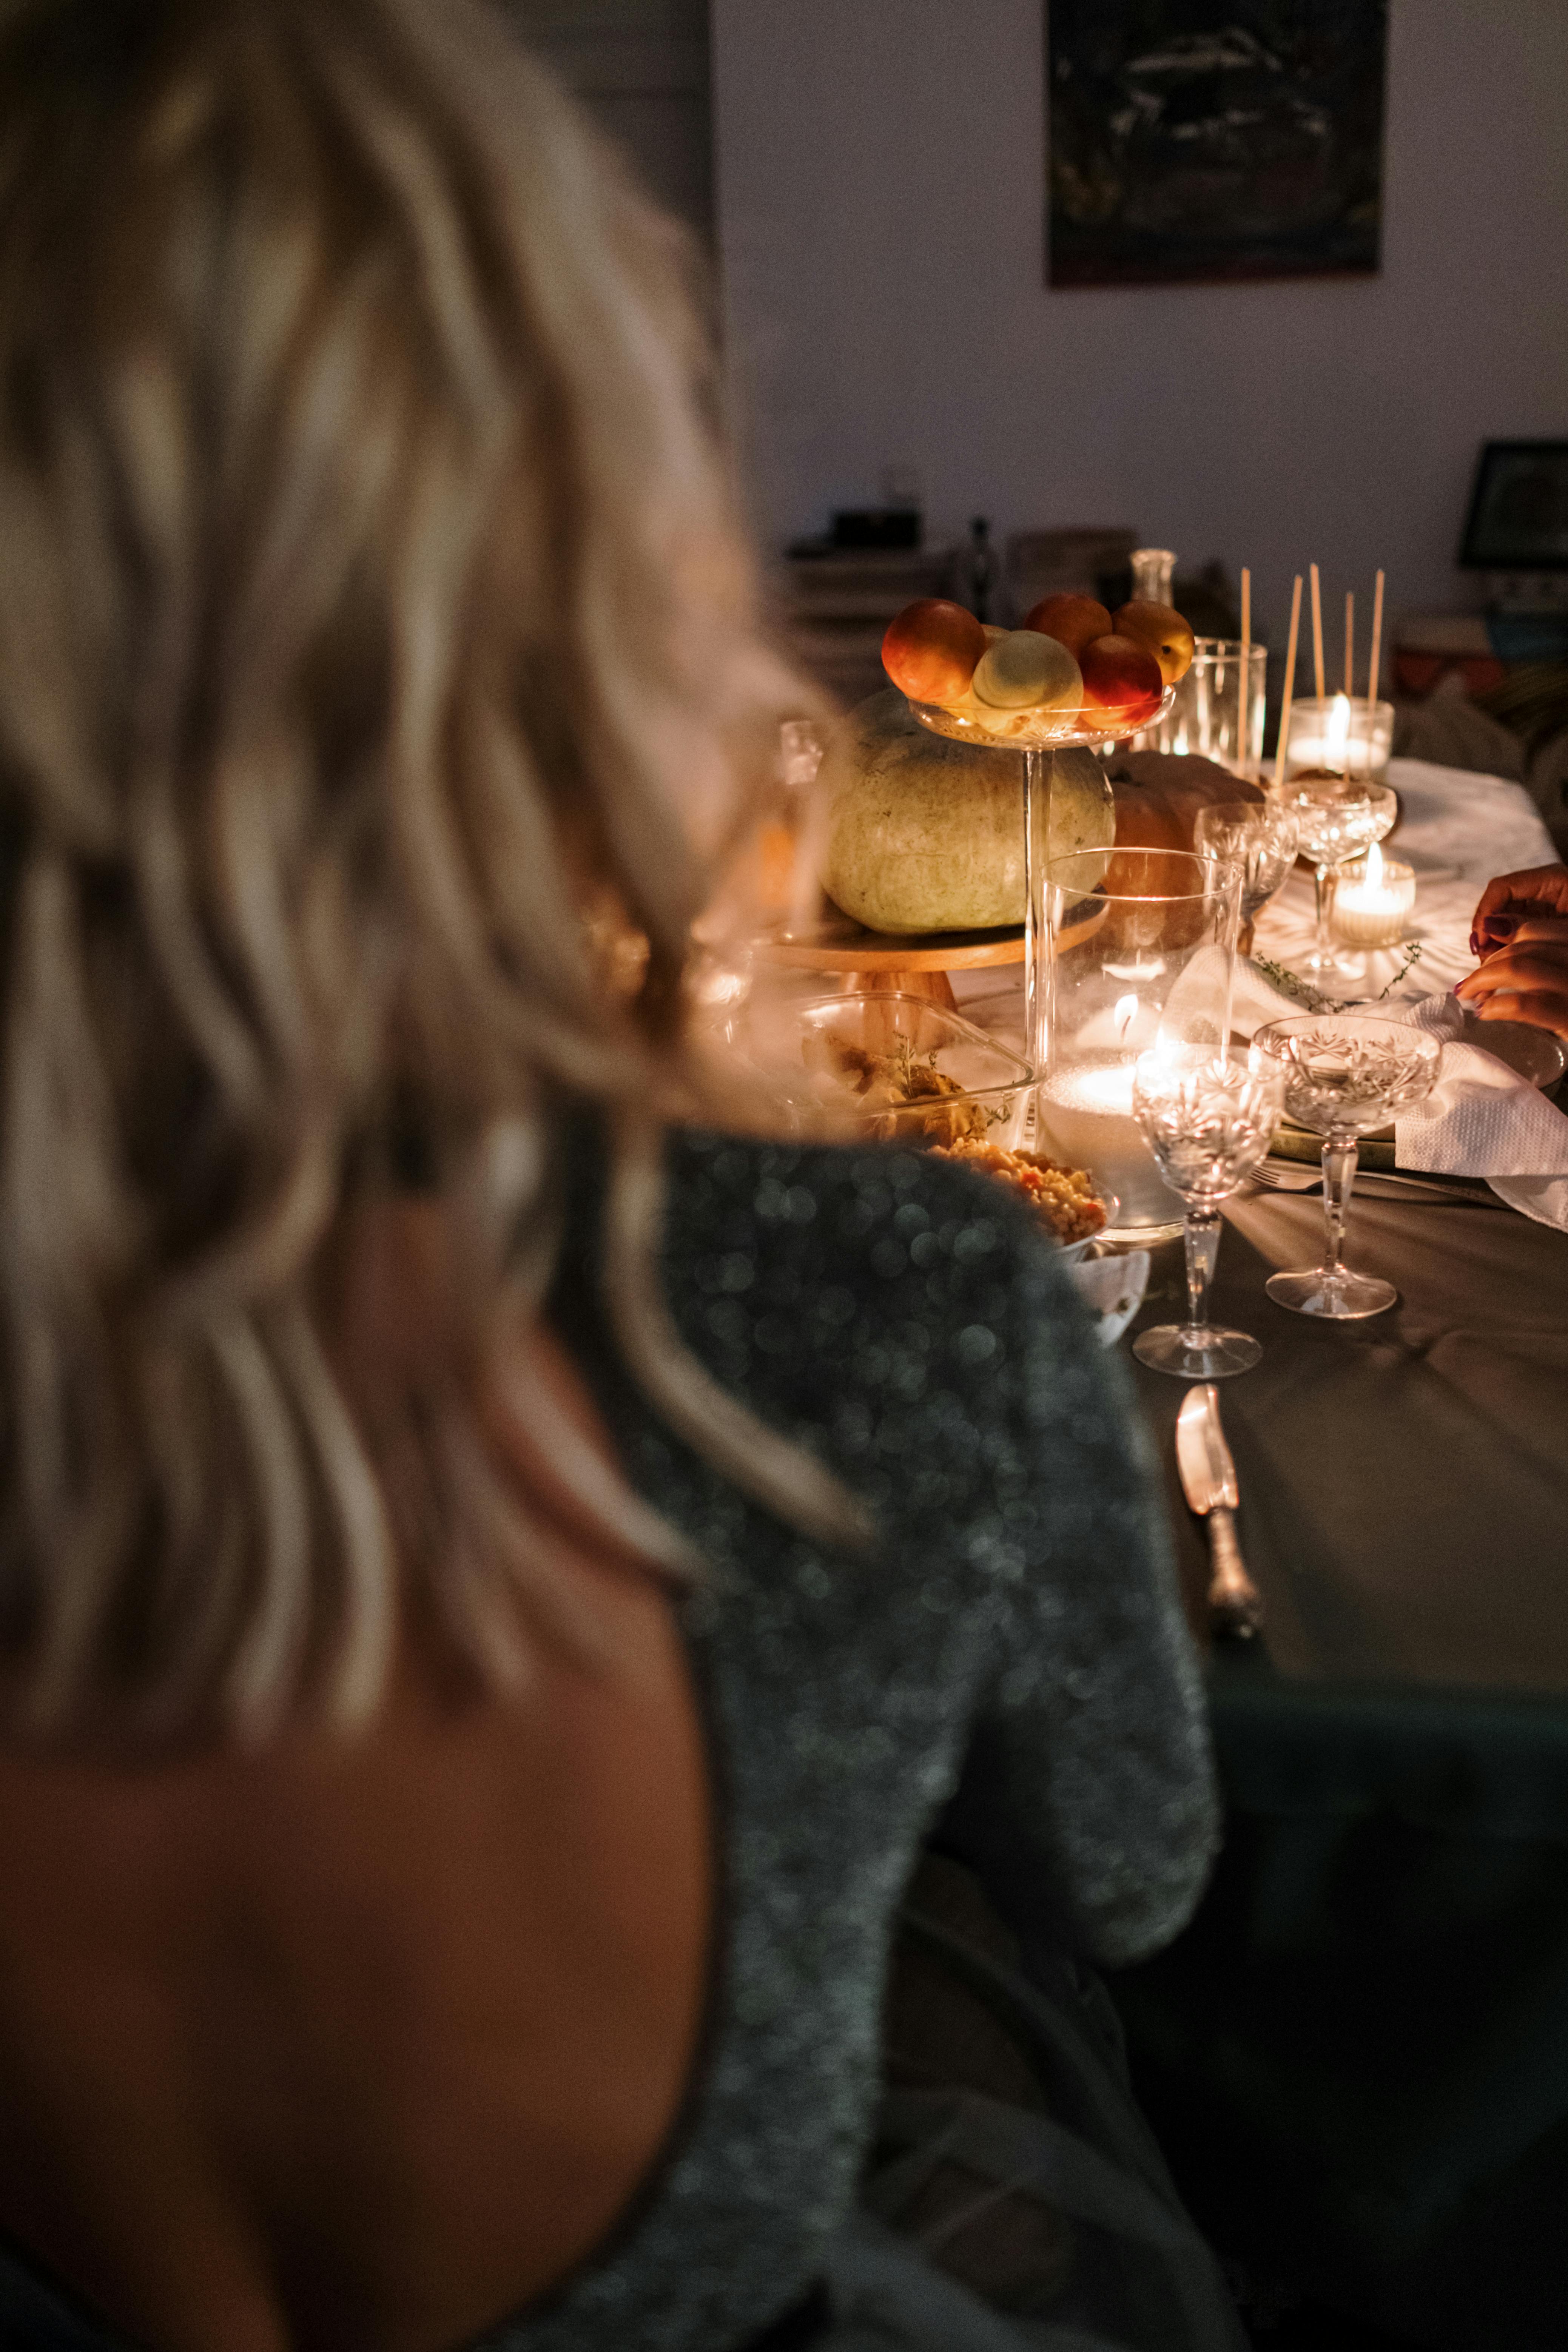 Sophia setting the dinner table | Source: Pexels